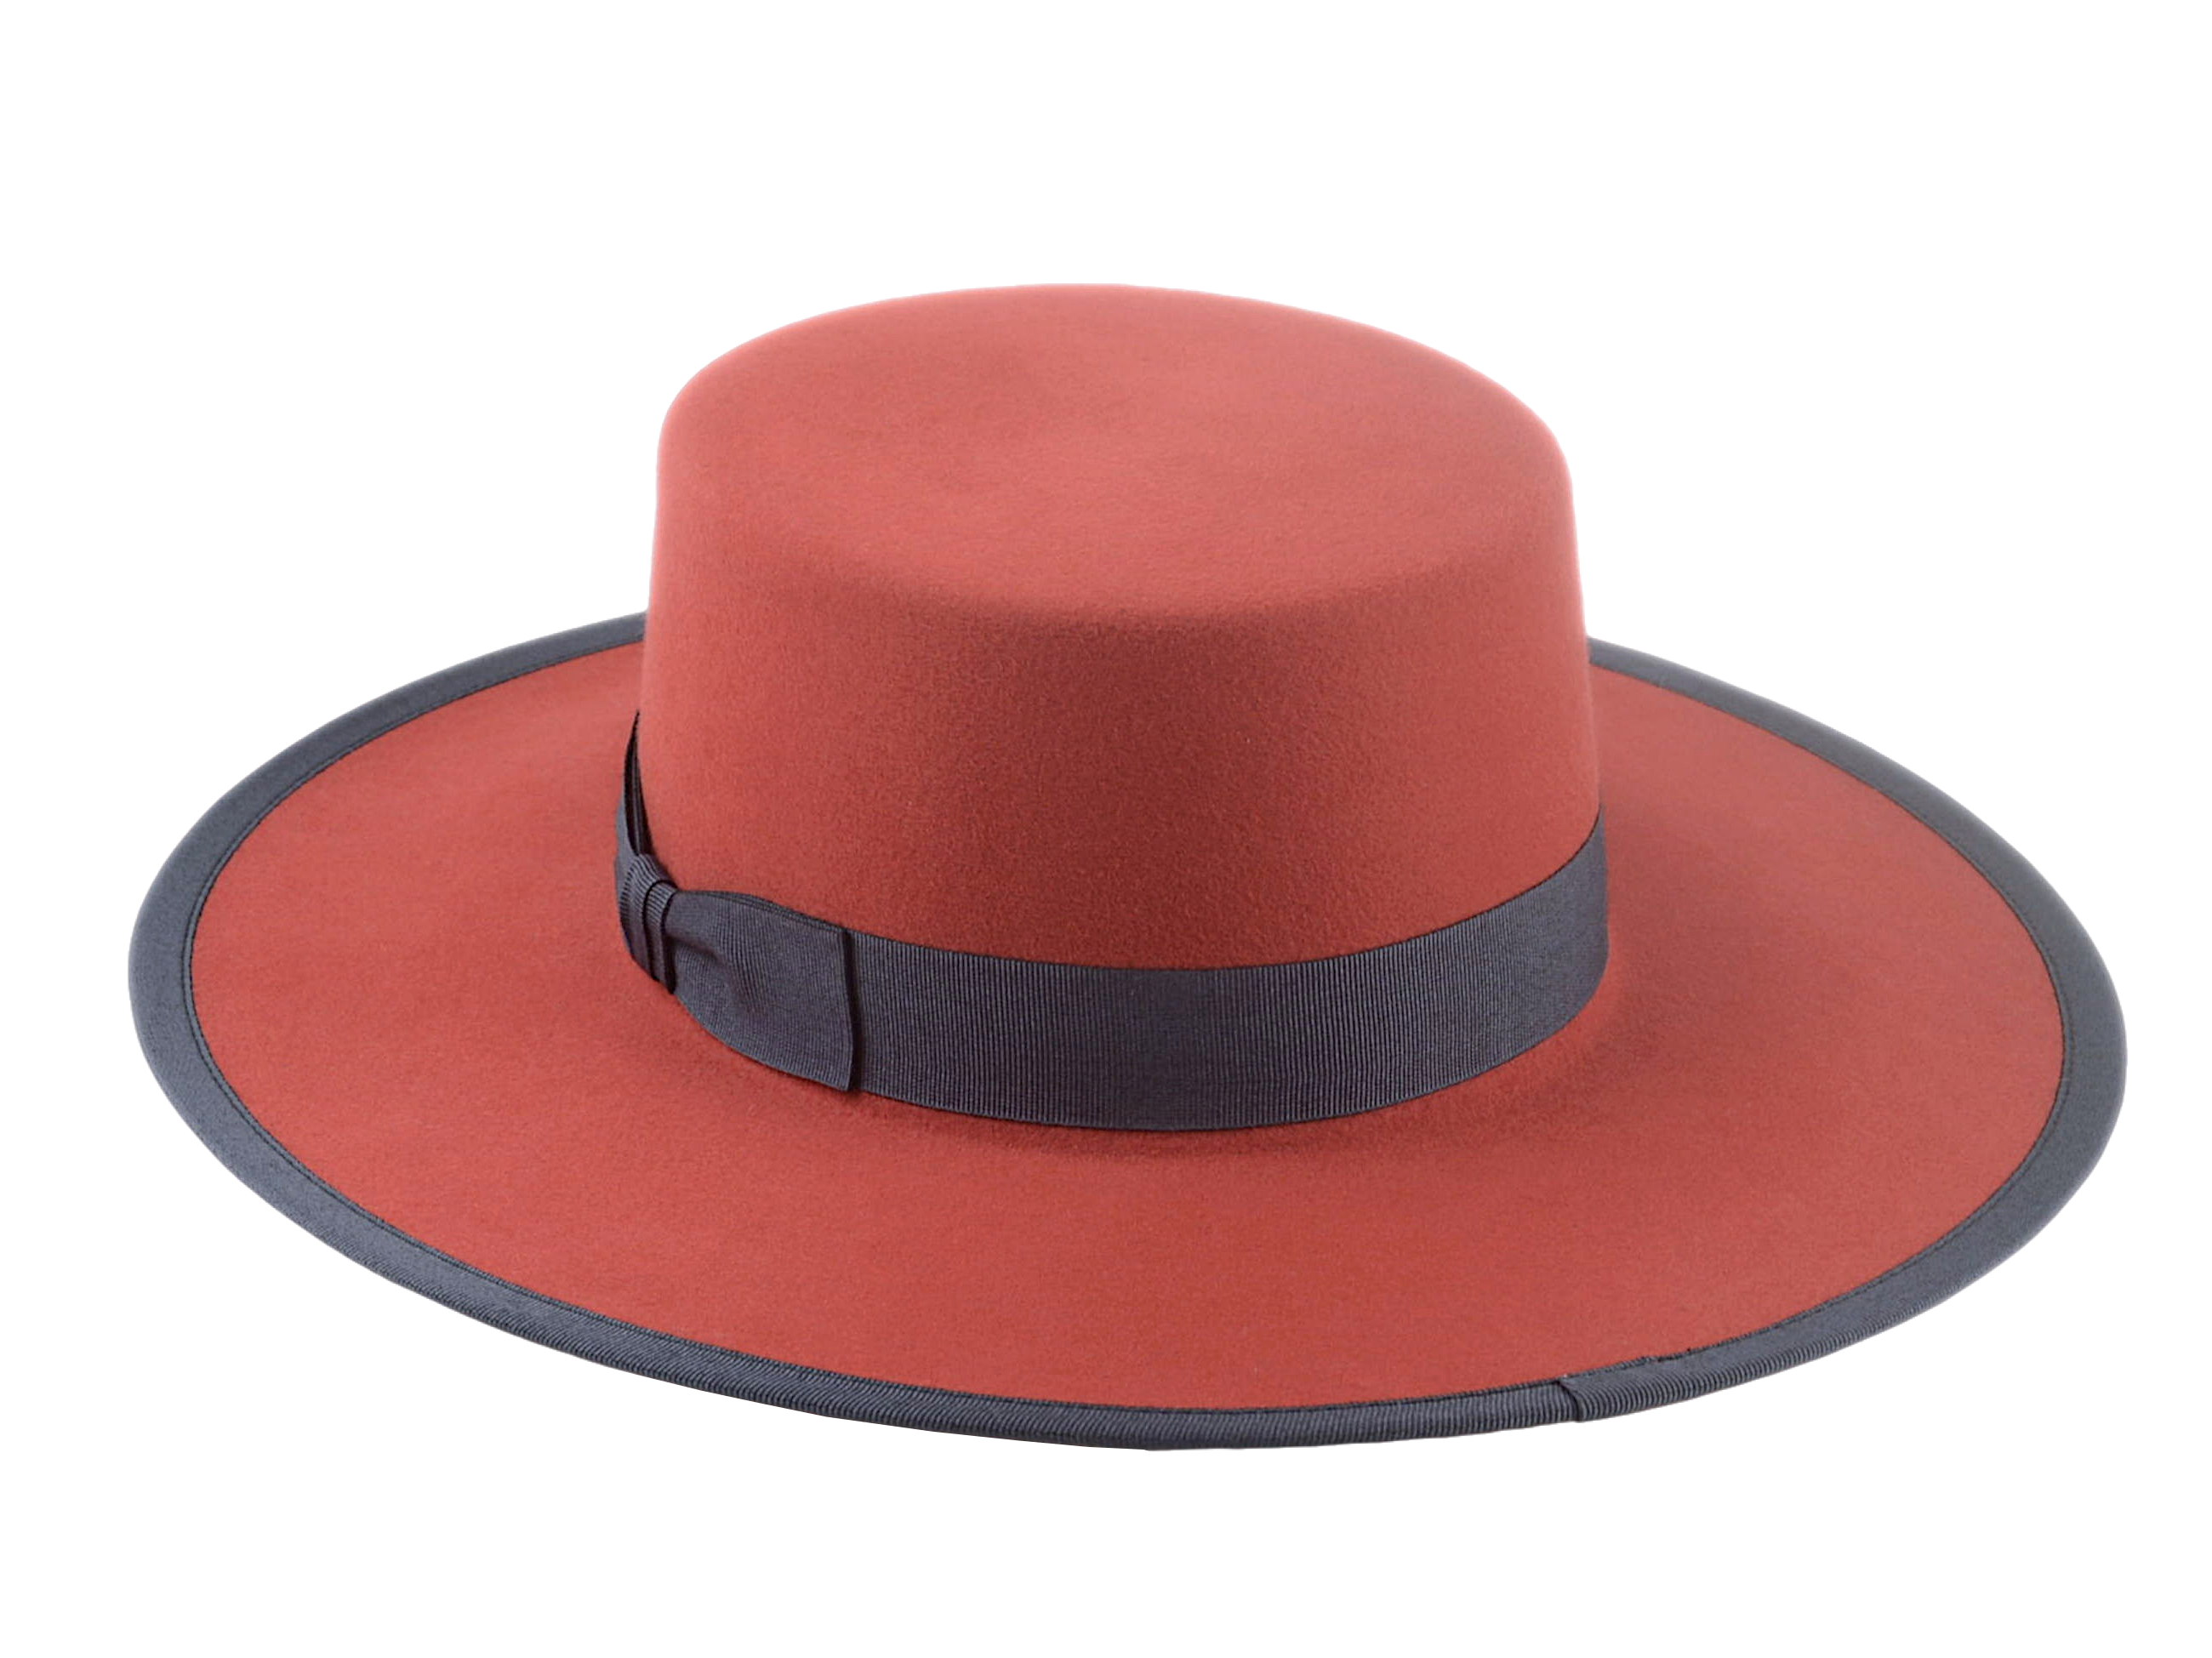 The TOWER | Agnoulita Custom Handmade Hats Agnoulita Hats 3 | Poppy Red, Rabbit fur felt, Western Style